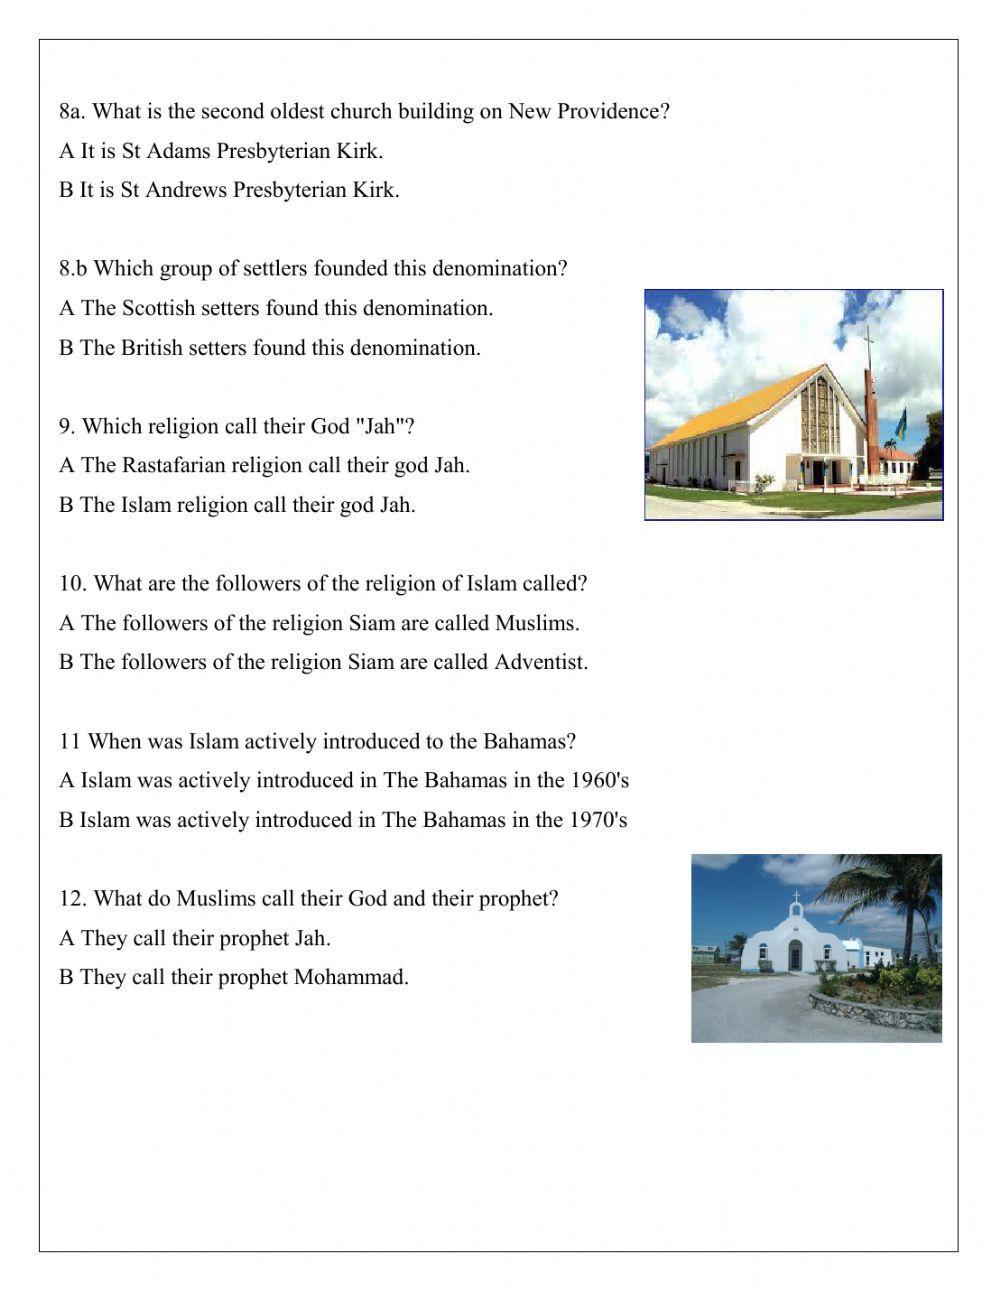 The Establishment of Religion in The Bahamas